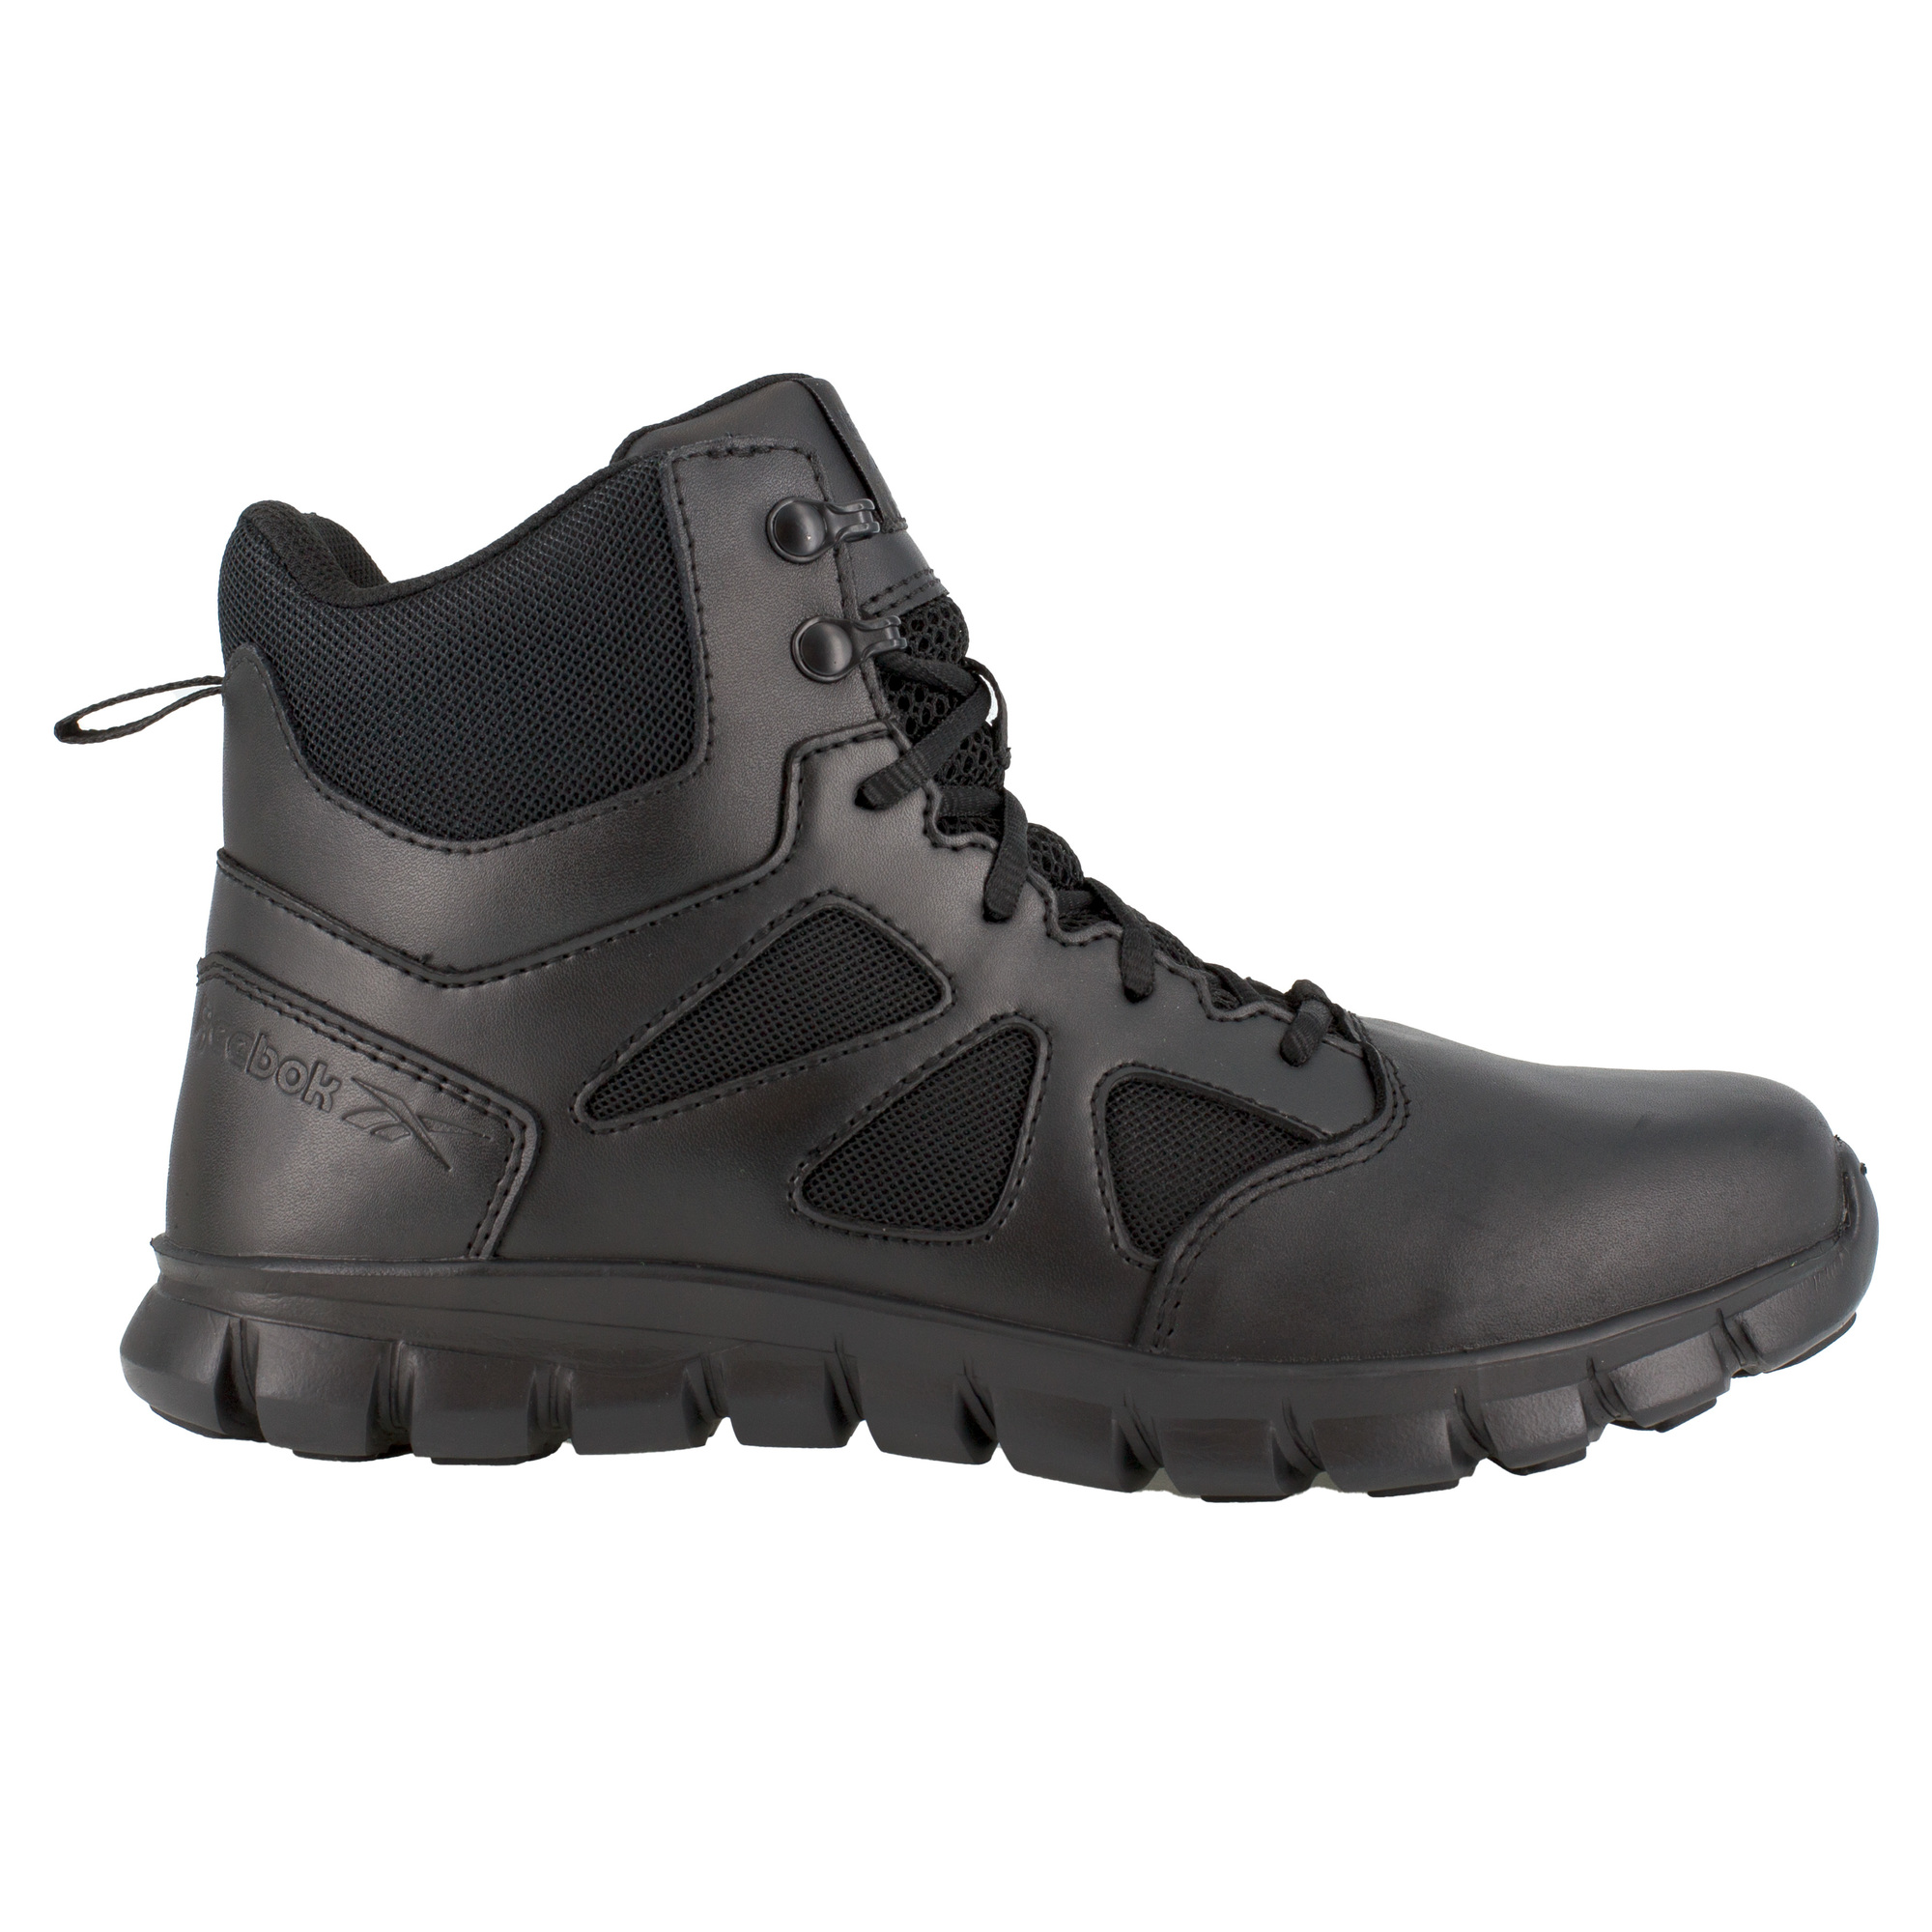 Reebok, 6Inch Tactical Boot w/Side Zipper, Size 10, Width Wide, Color Black, Model RB086